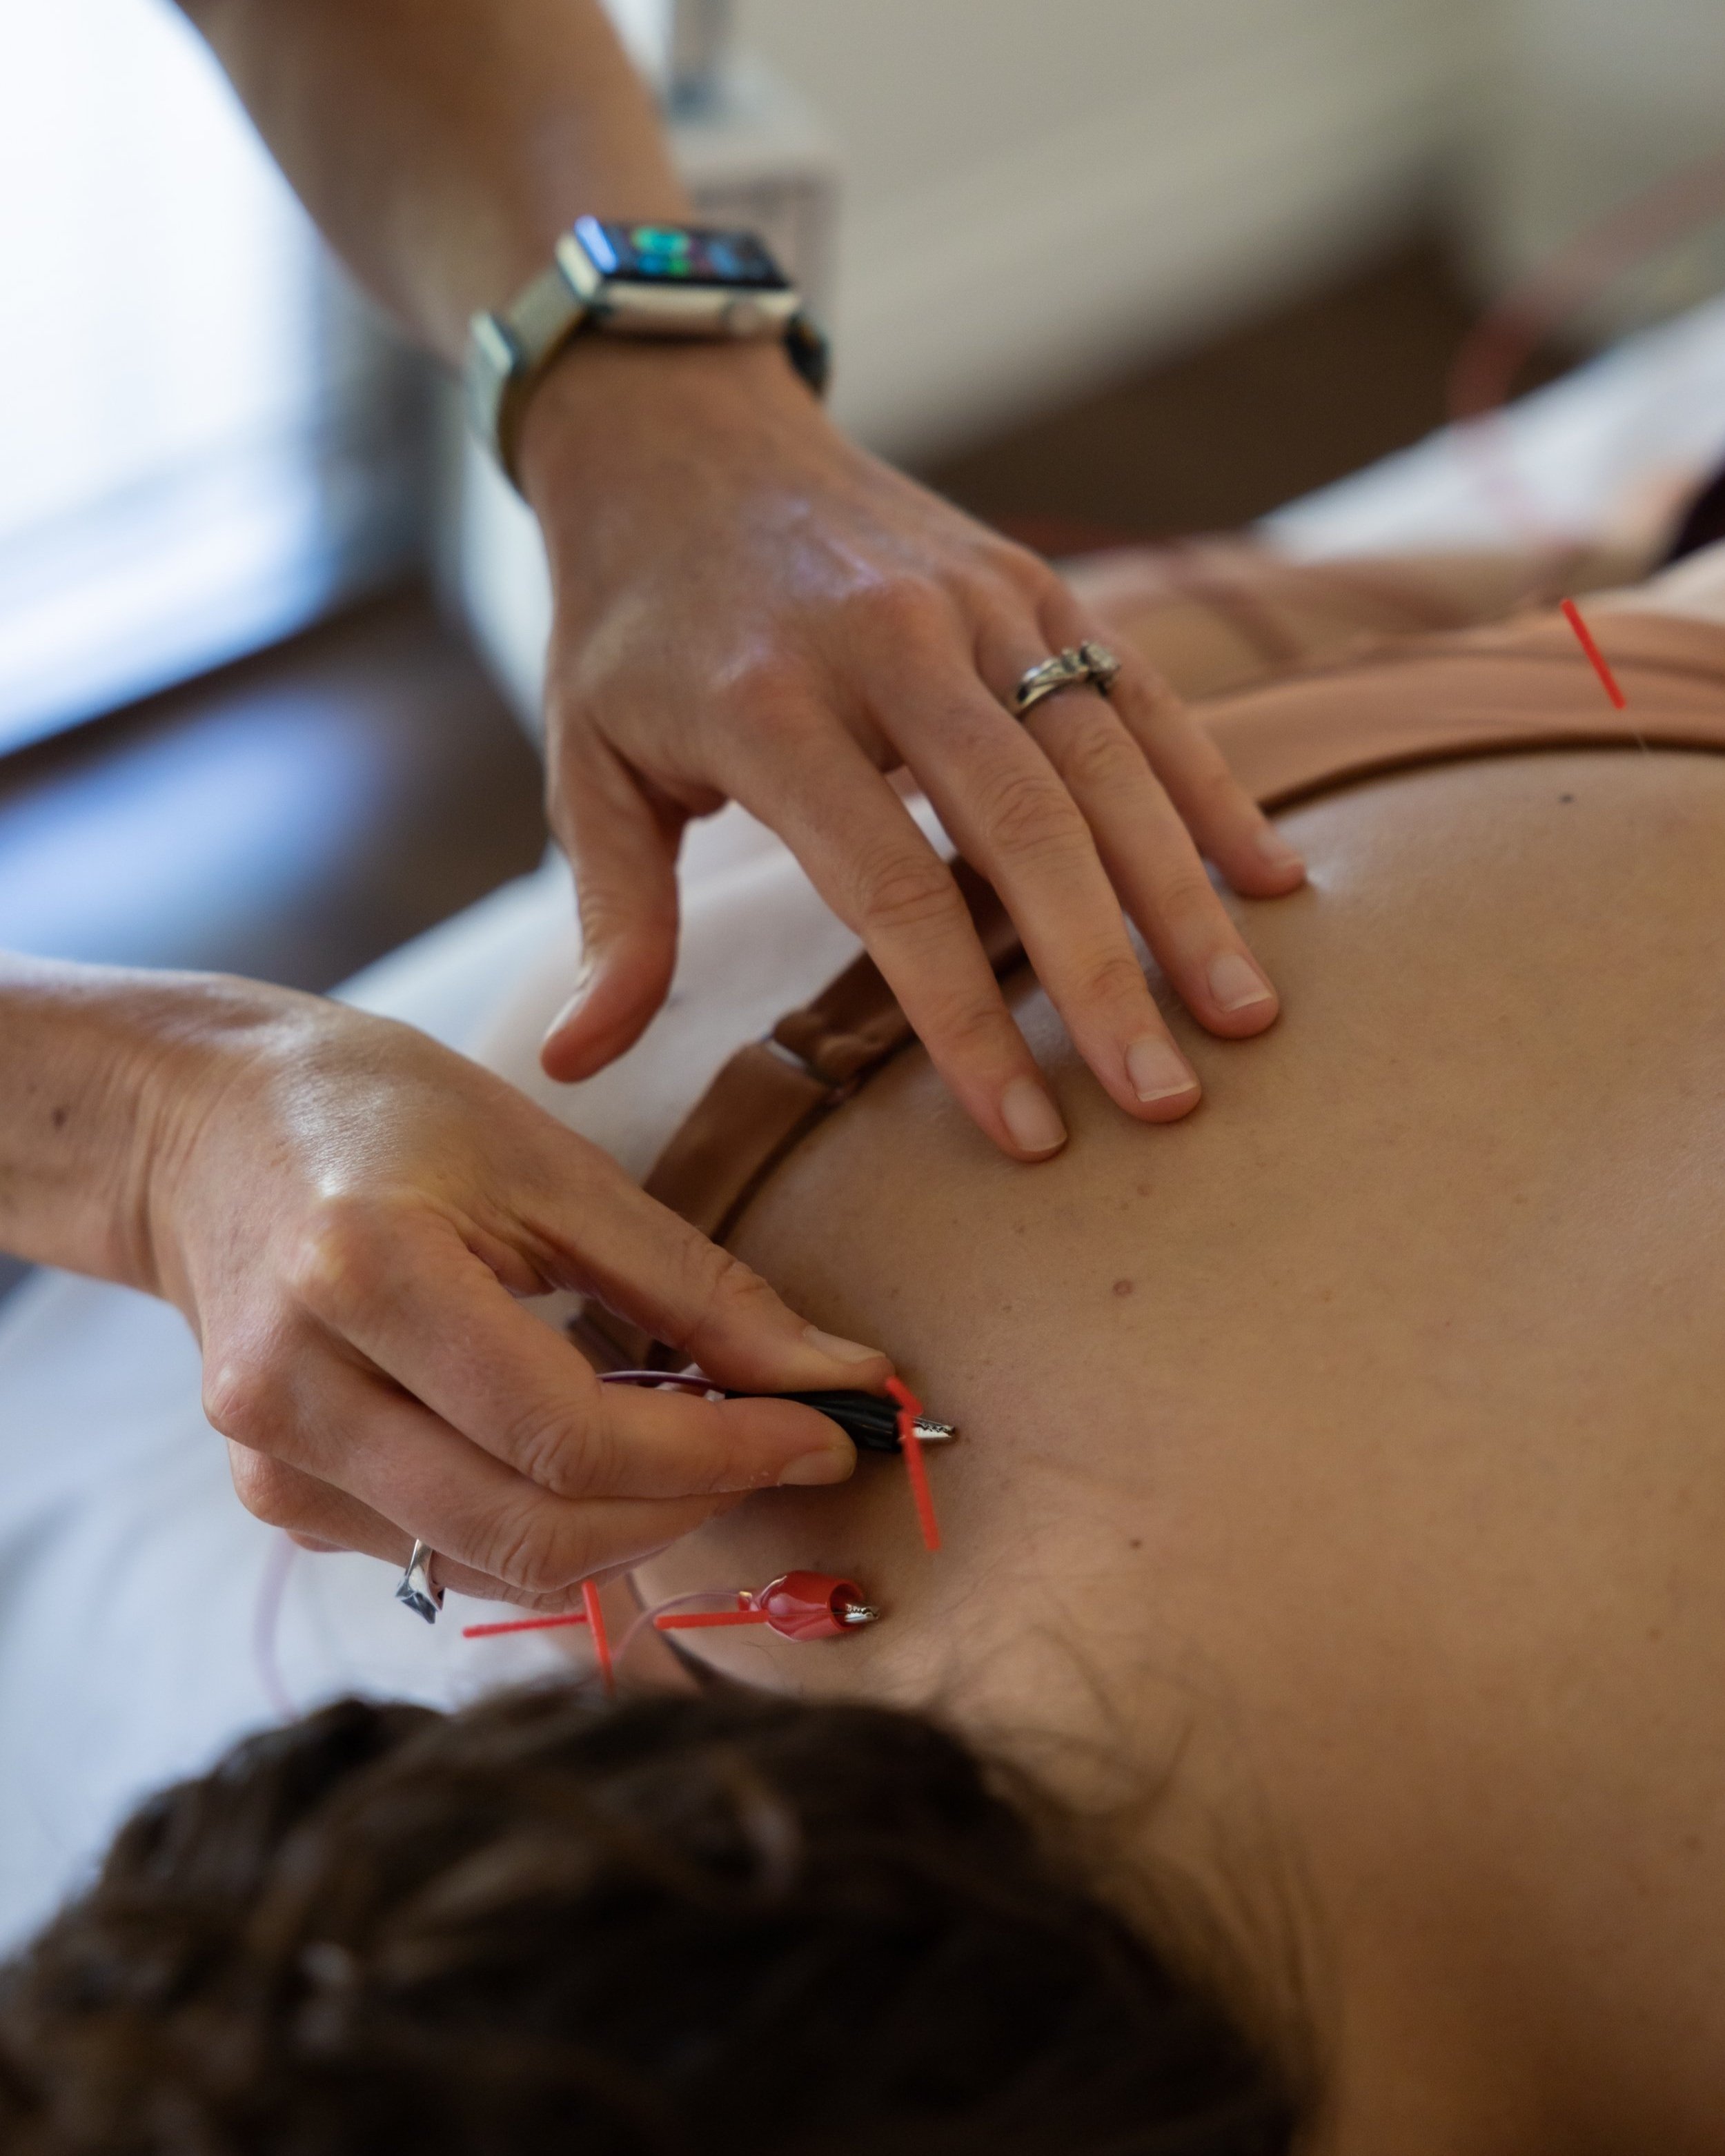 Sydney Remedial Massage  Dry Needling and Electro-Dry Needling - What Is  the Difference? - Sydney Remedial Massage